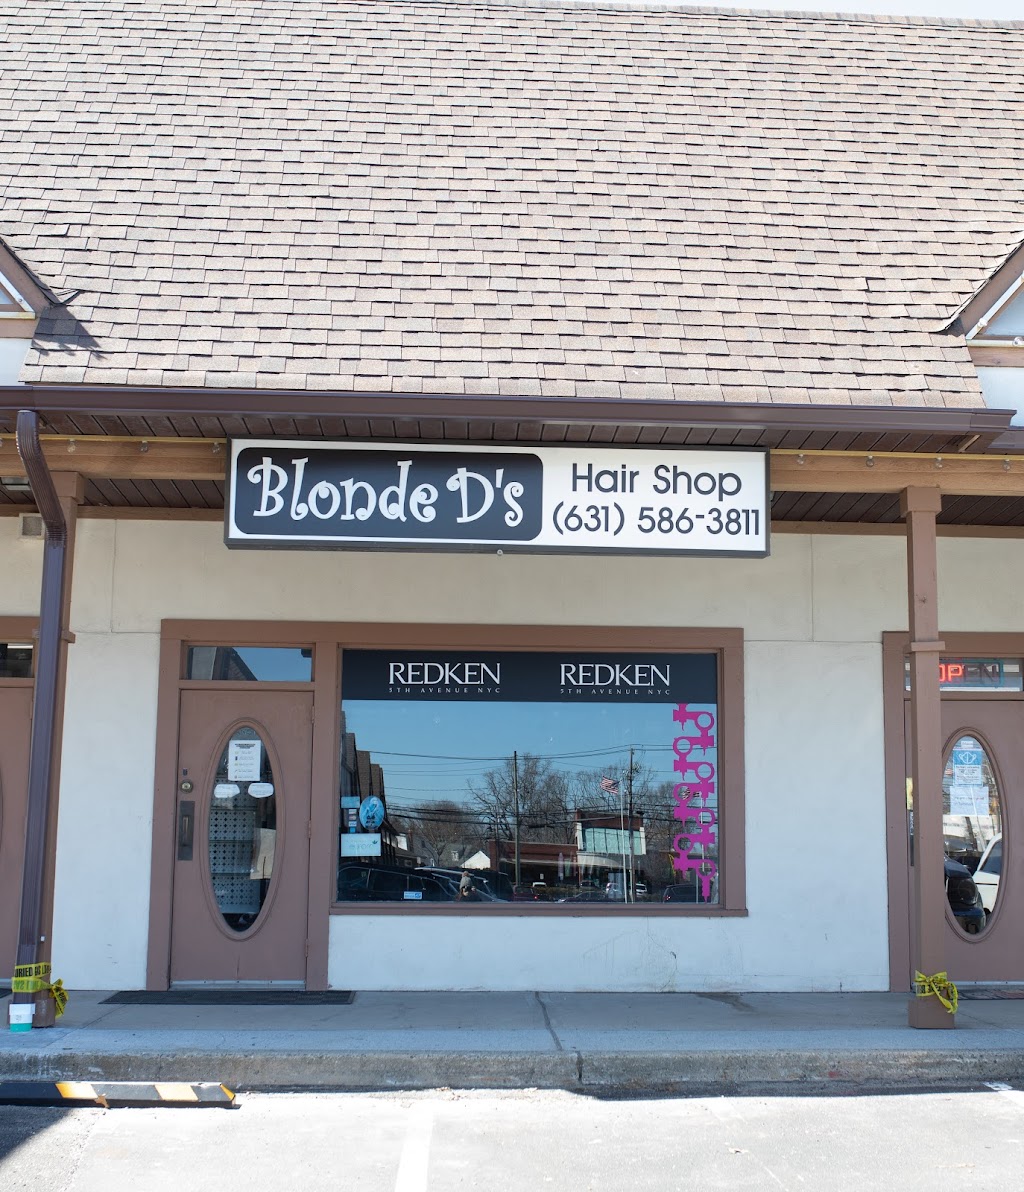 Blonde Ds Hair Shop | La Grande Place, 1350 10 Deer Pk Ave, North Babylon, NY 11703 | Phone: (631) 586-3811